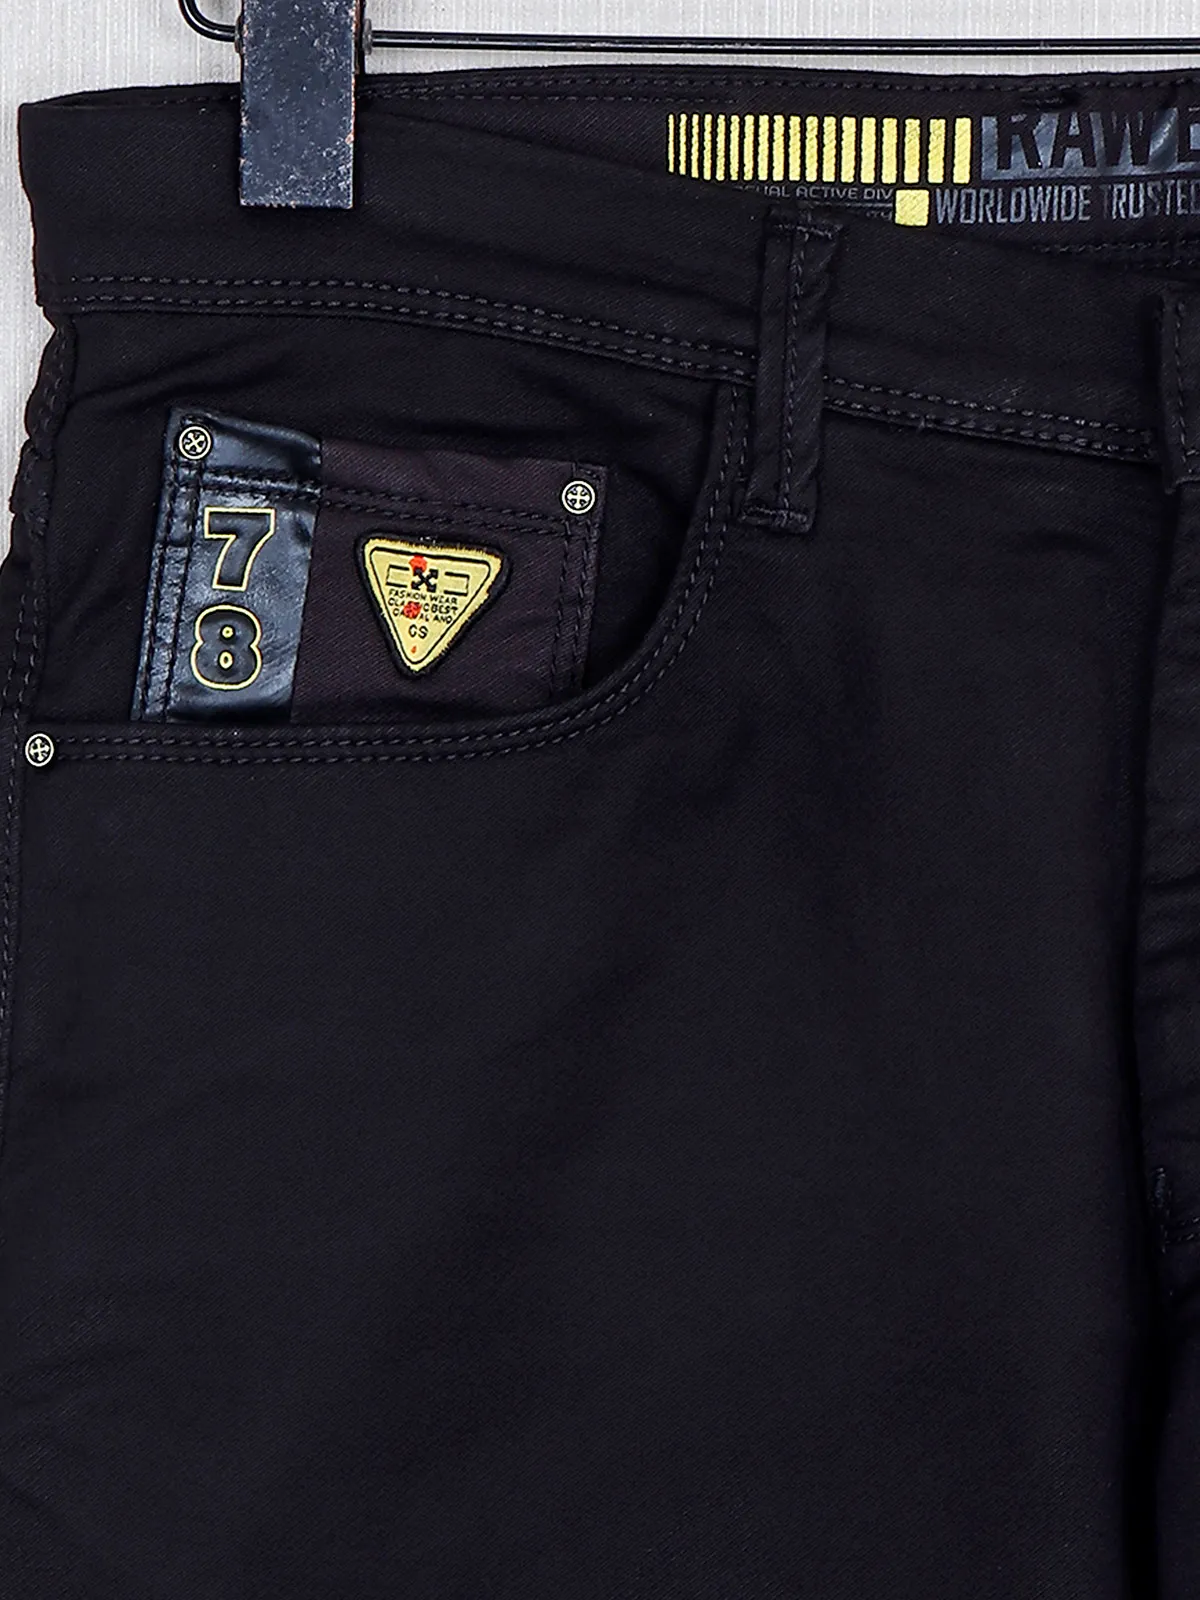 GS78 black solid mens denim jeans